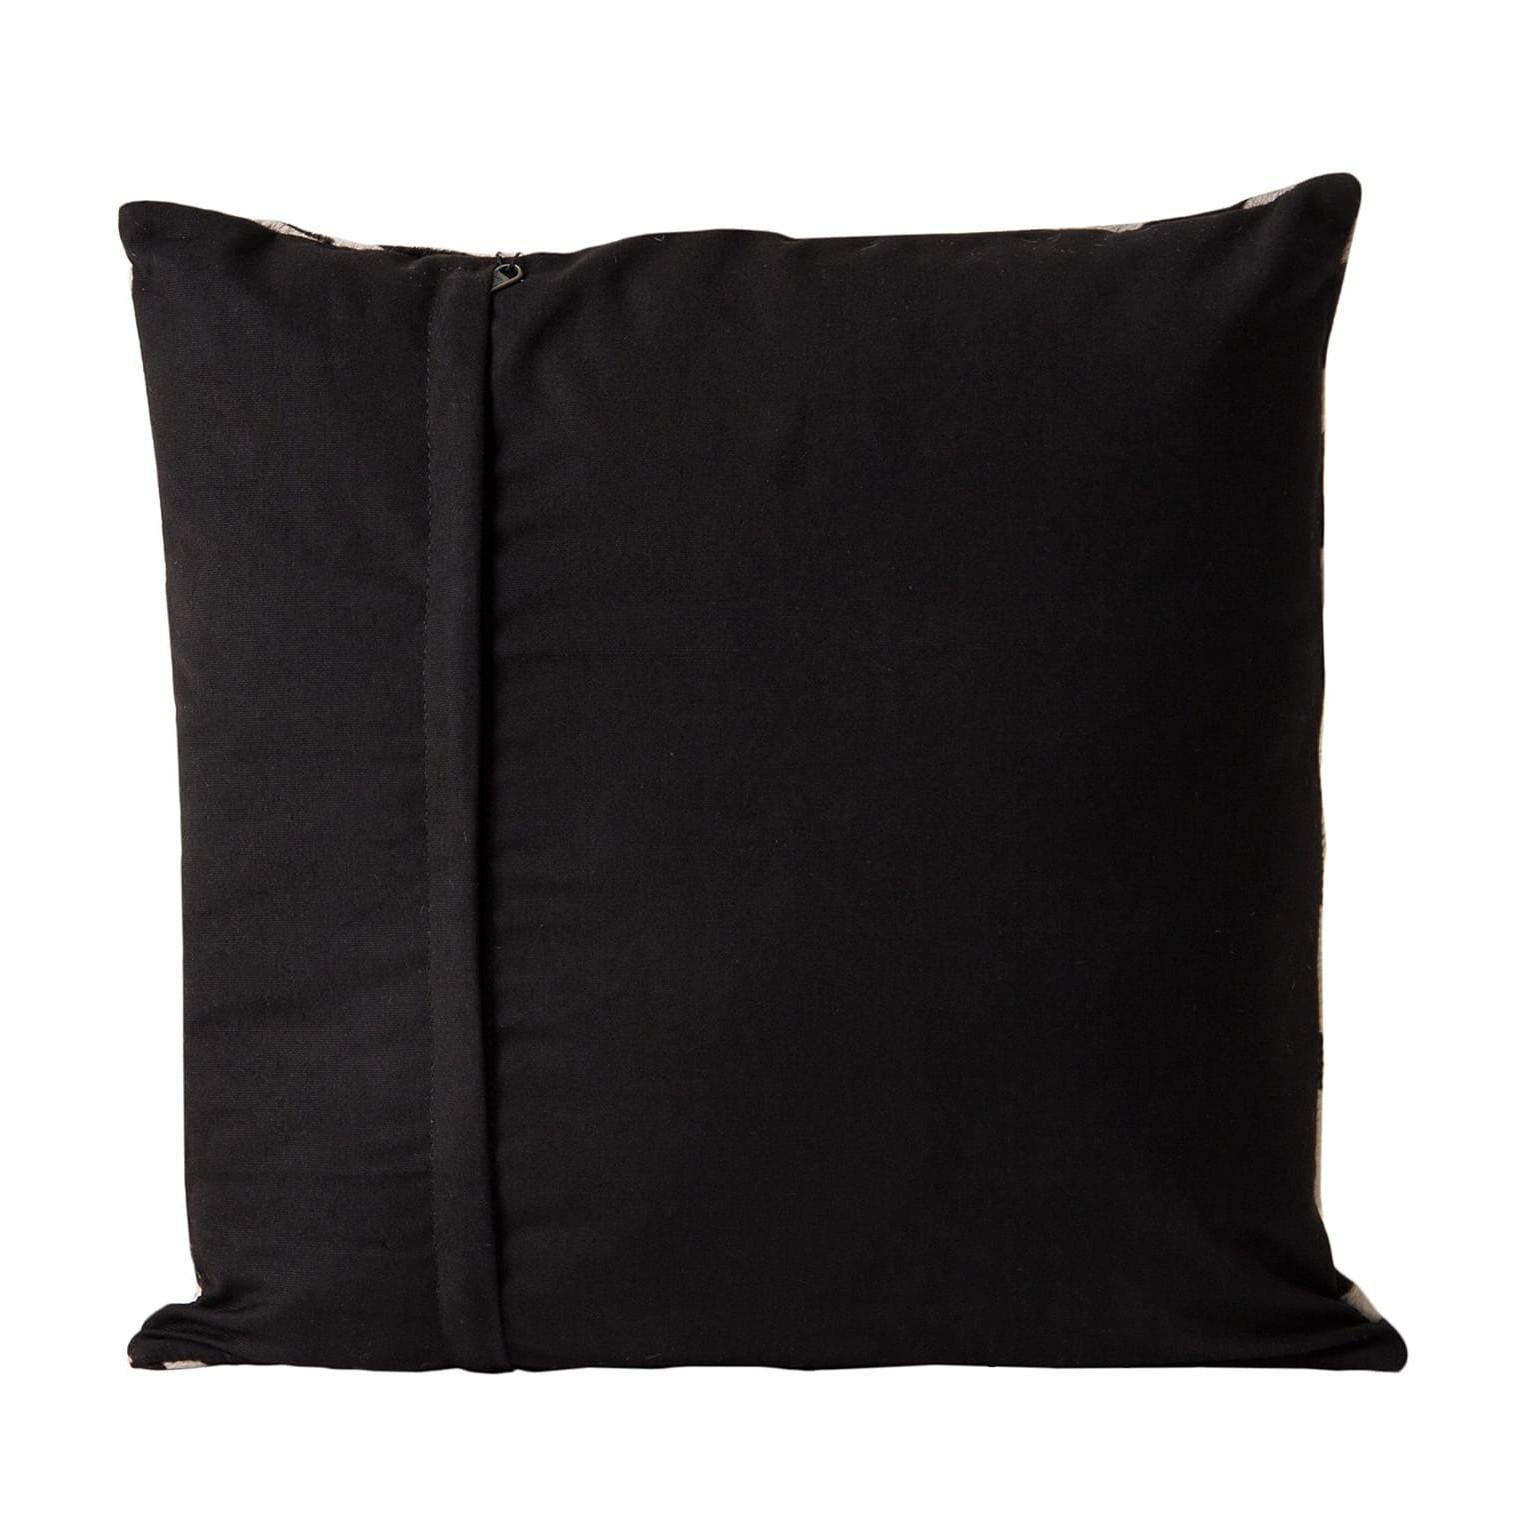 Black and white cowhide cushion.